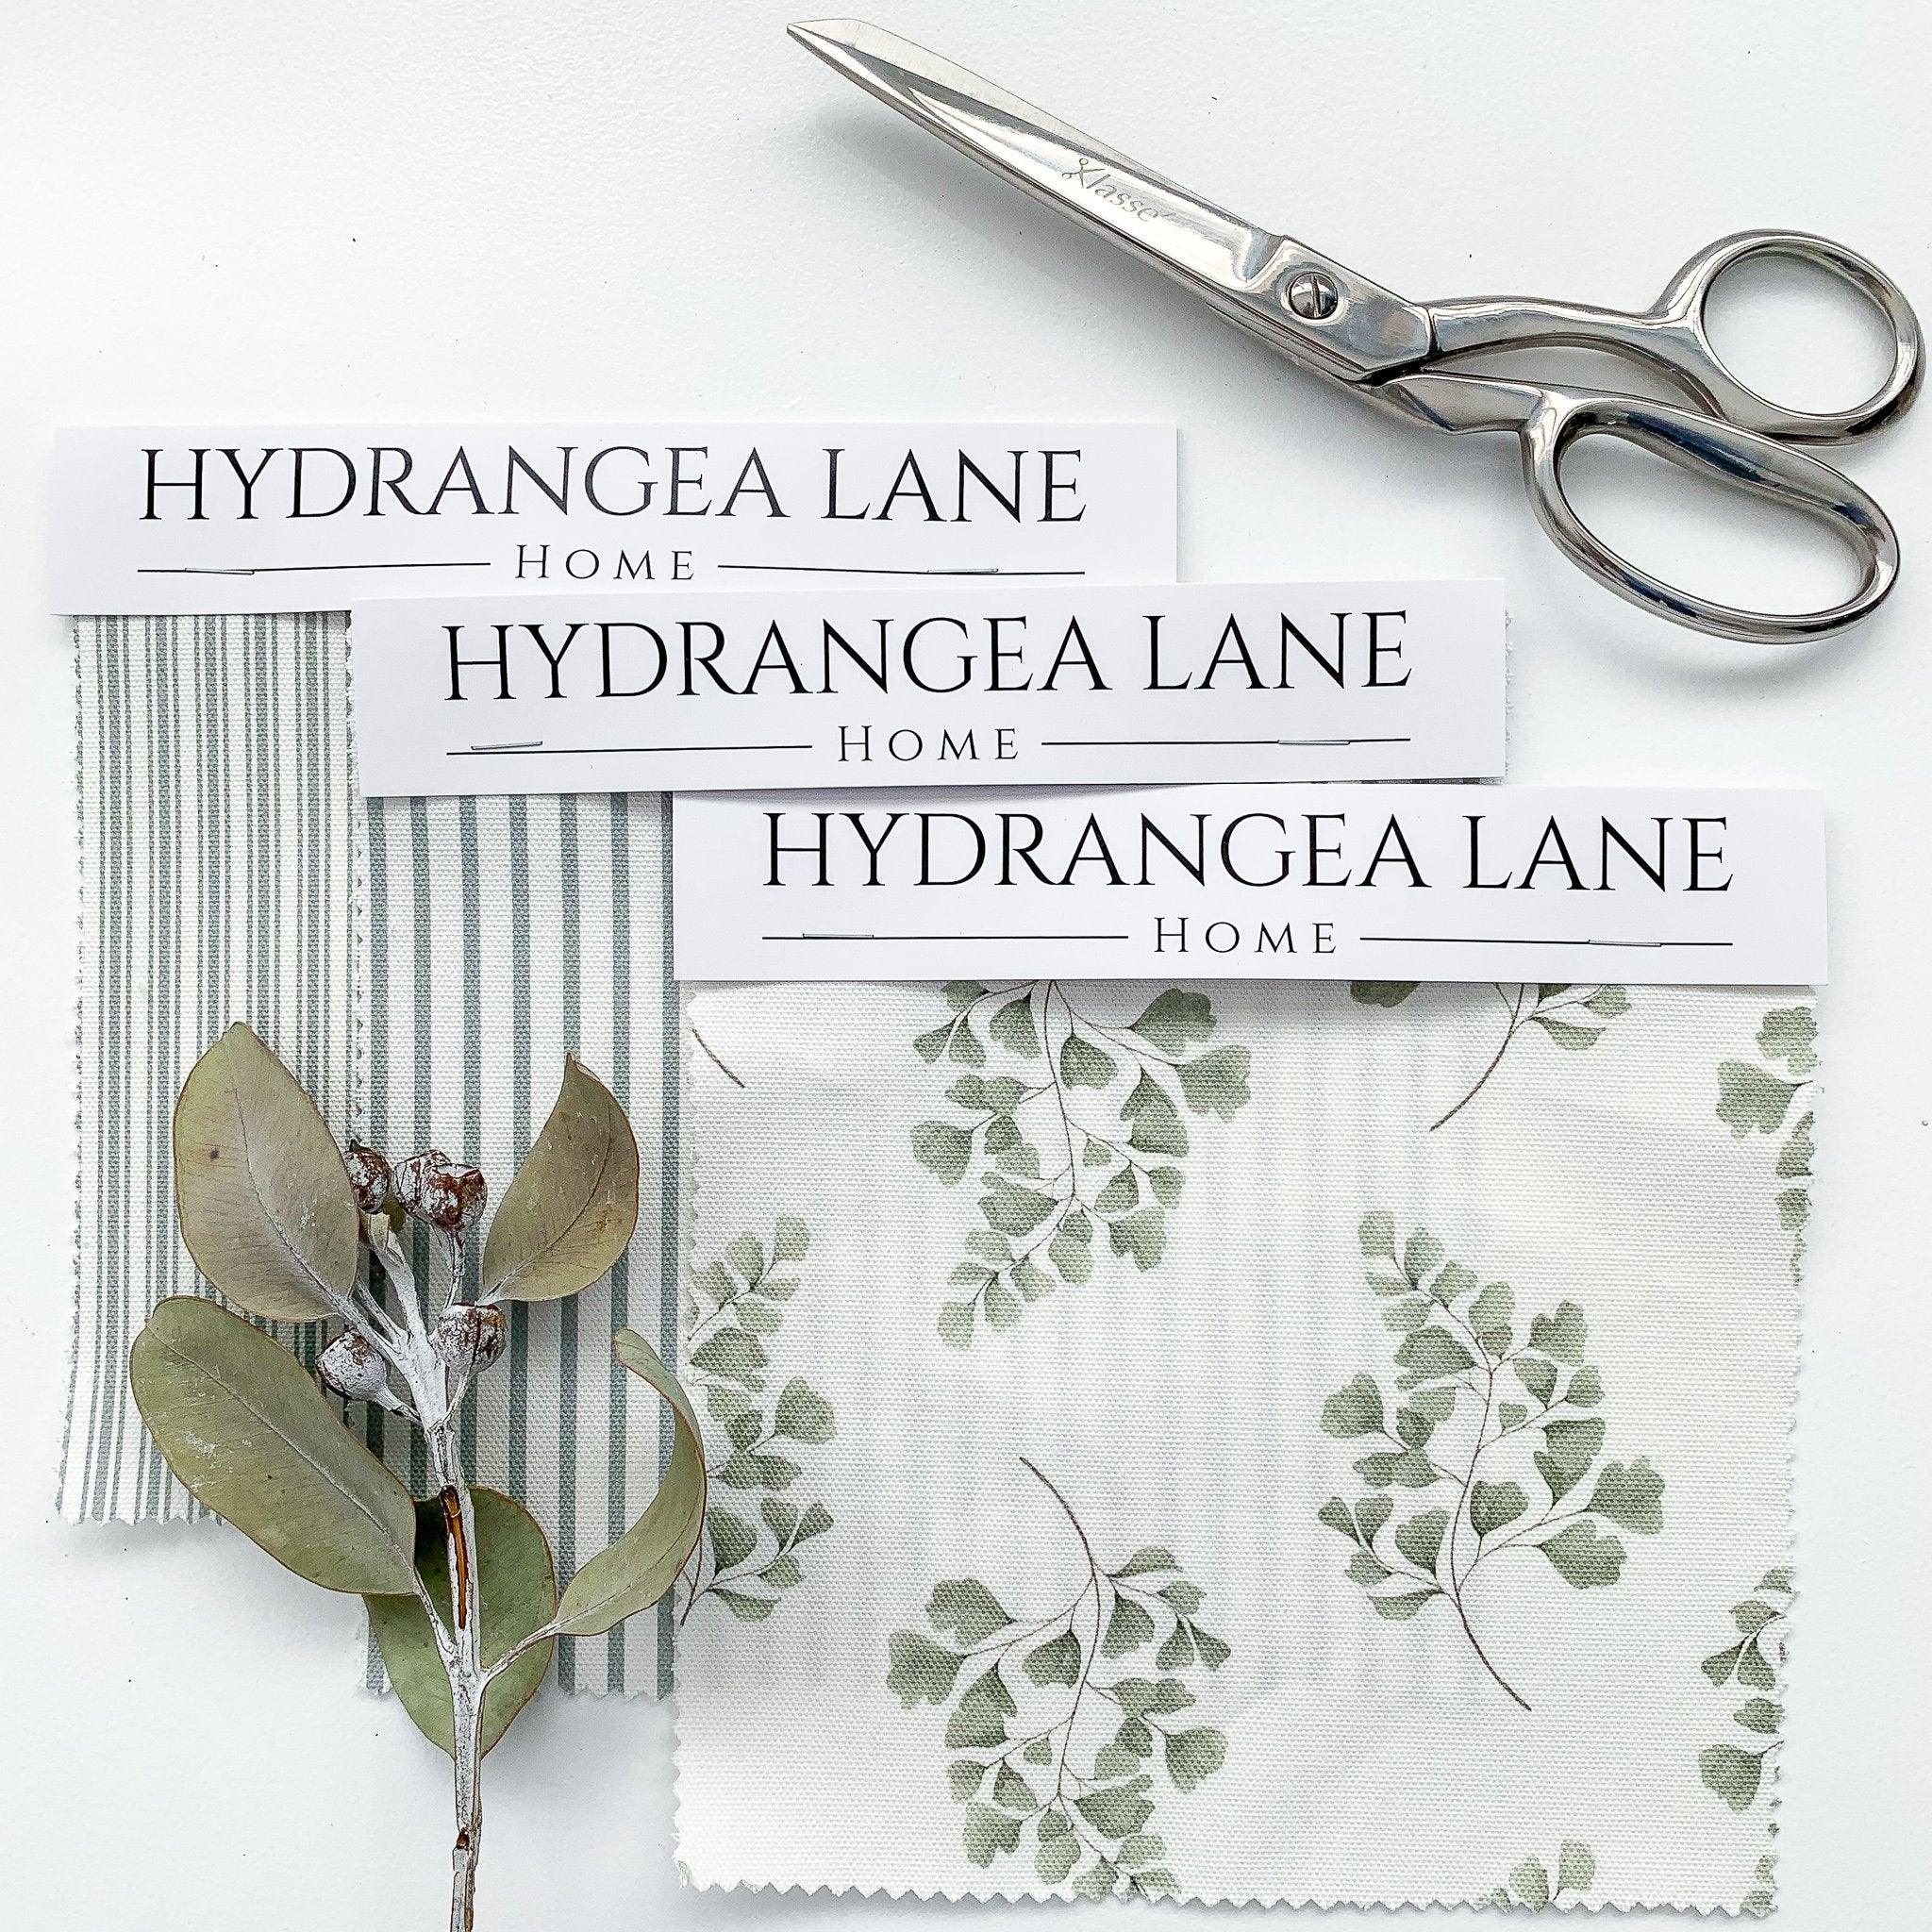 Maiden Hair Fern Fabric - Hydrangea Lane Home